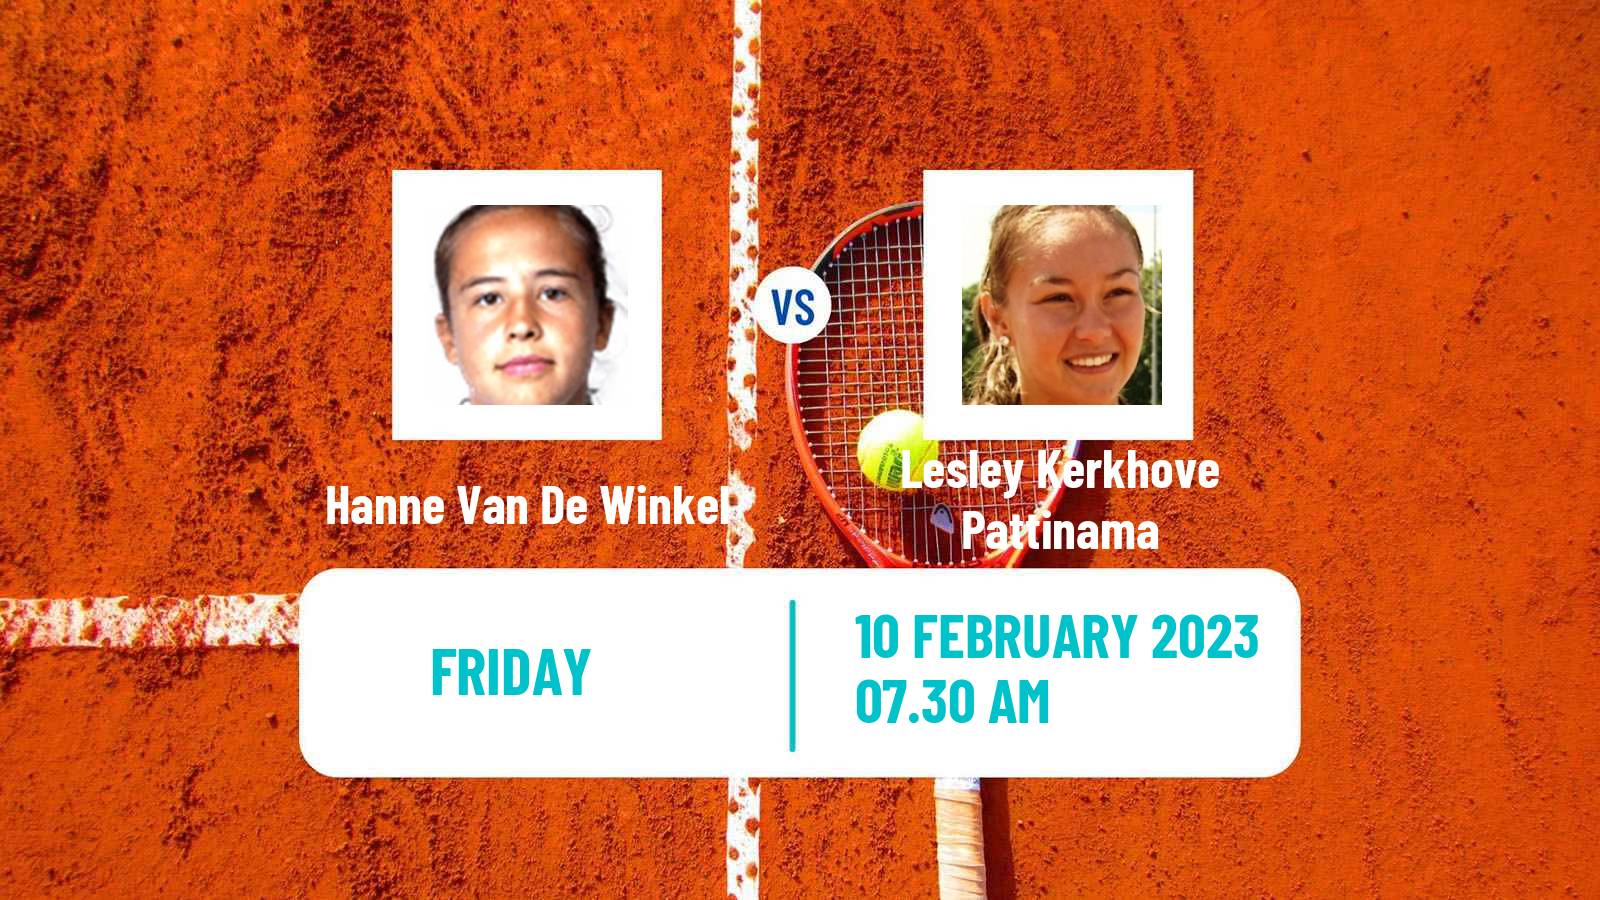 Tennis ITF Tournaments Hanne Van De Winkel - Lesley Kerkhove Pattinama